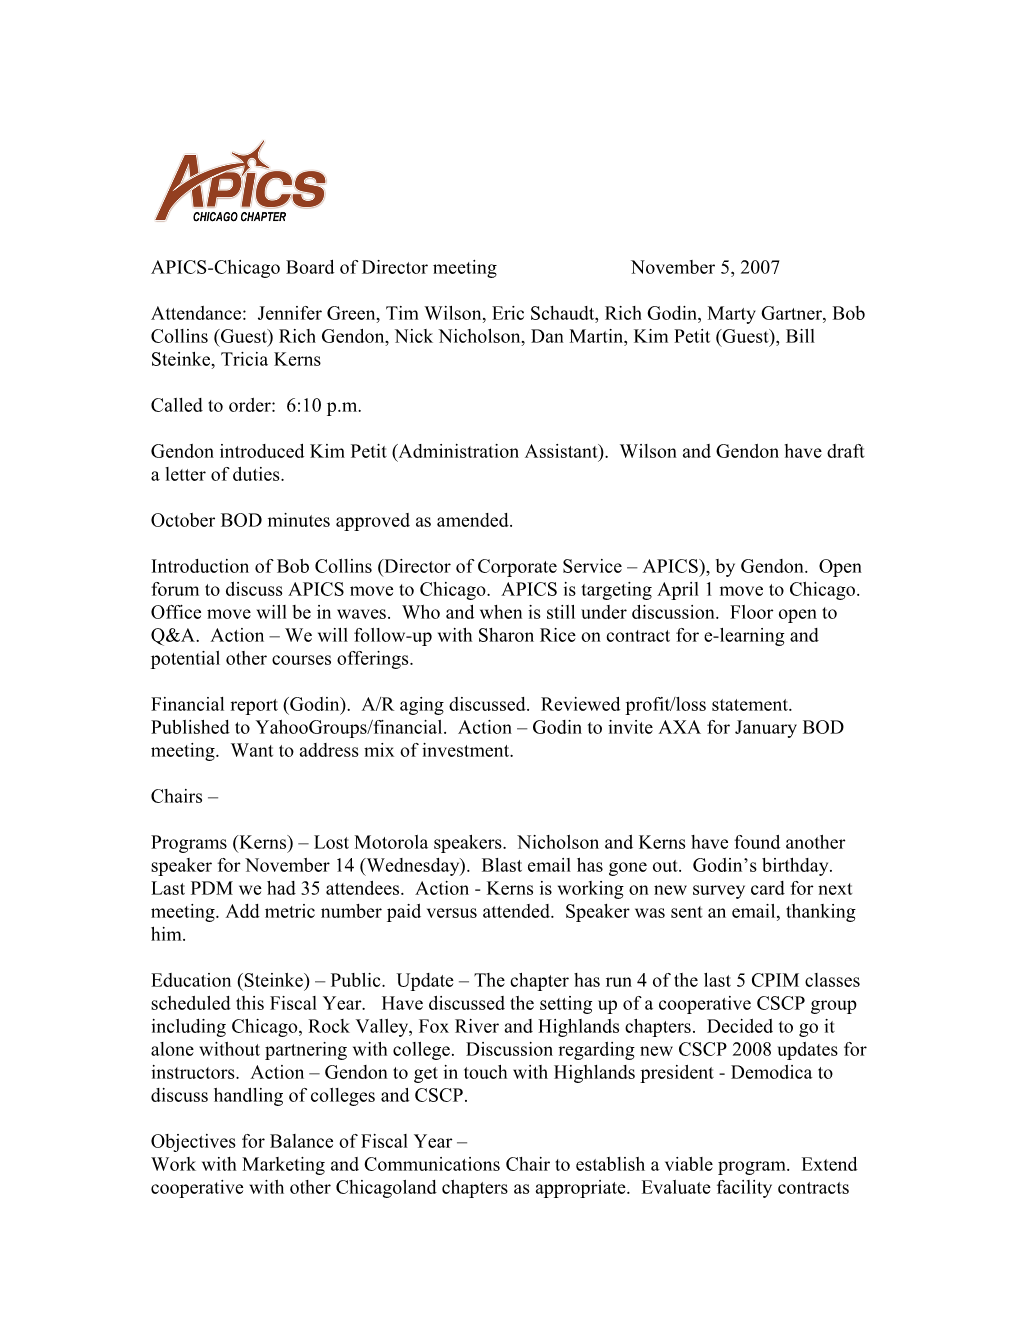 APICS-Chicago BOD Meeting